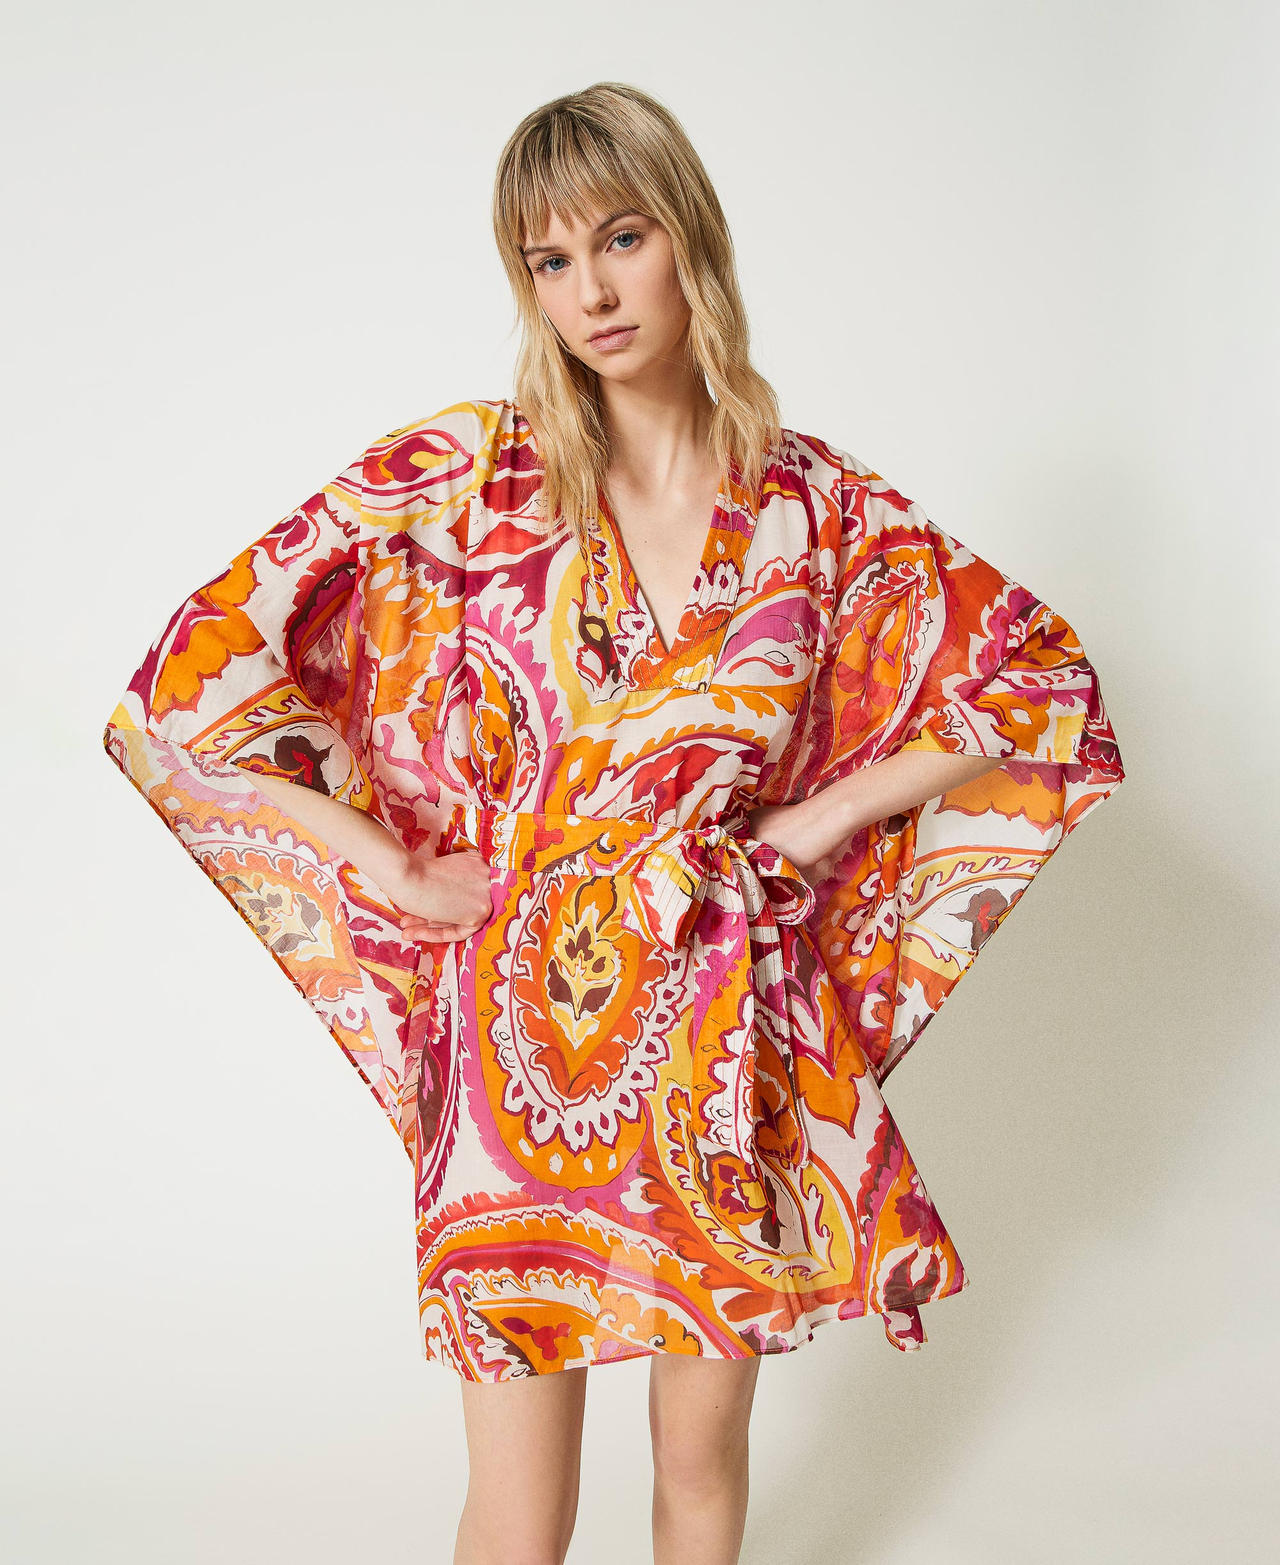 Robe caftan courte en mousseline imprimée Imprimé Motif Cachemire Jaune/Fuchsia « Cerise » Femme 231TT2437-02